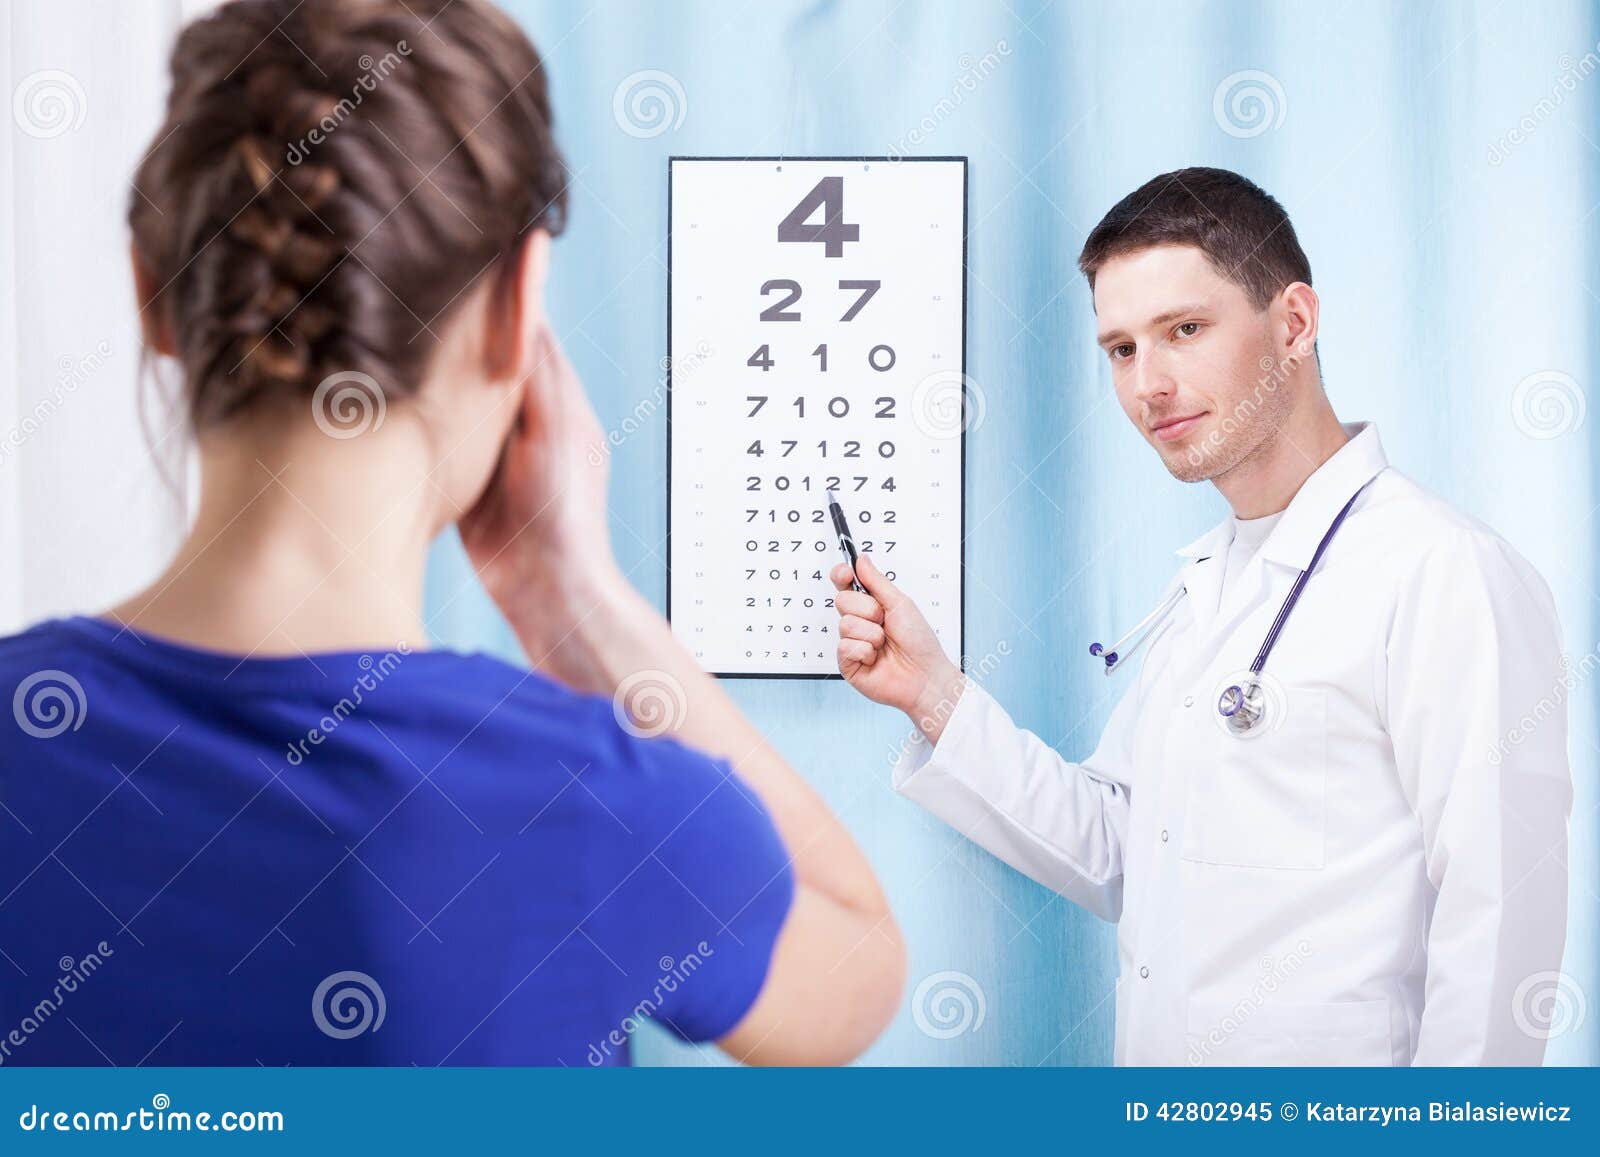 Пельмени на приеме у врача. Мужчина окулист. Мужчина у офтальмолога. Парень у окулиста. Женщина у окулиста.